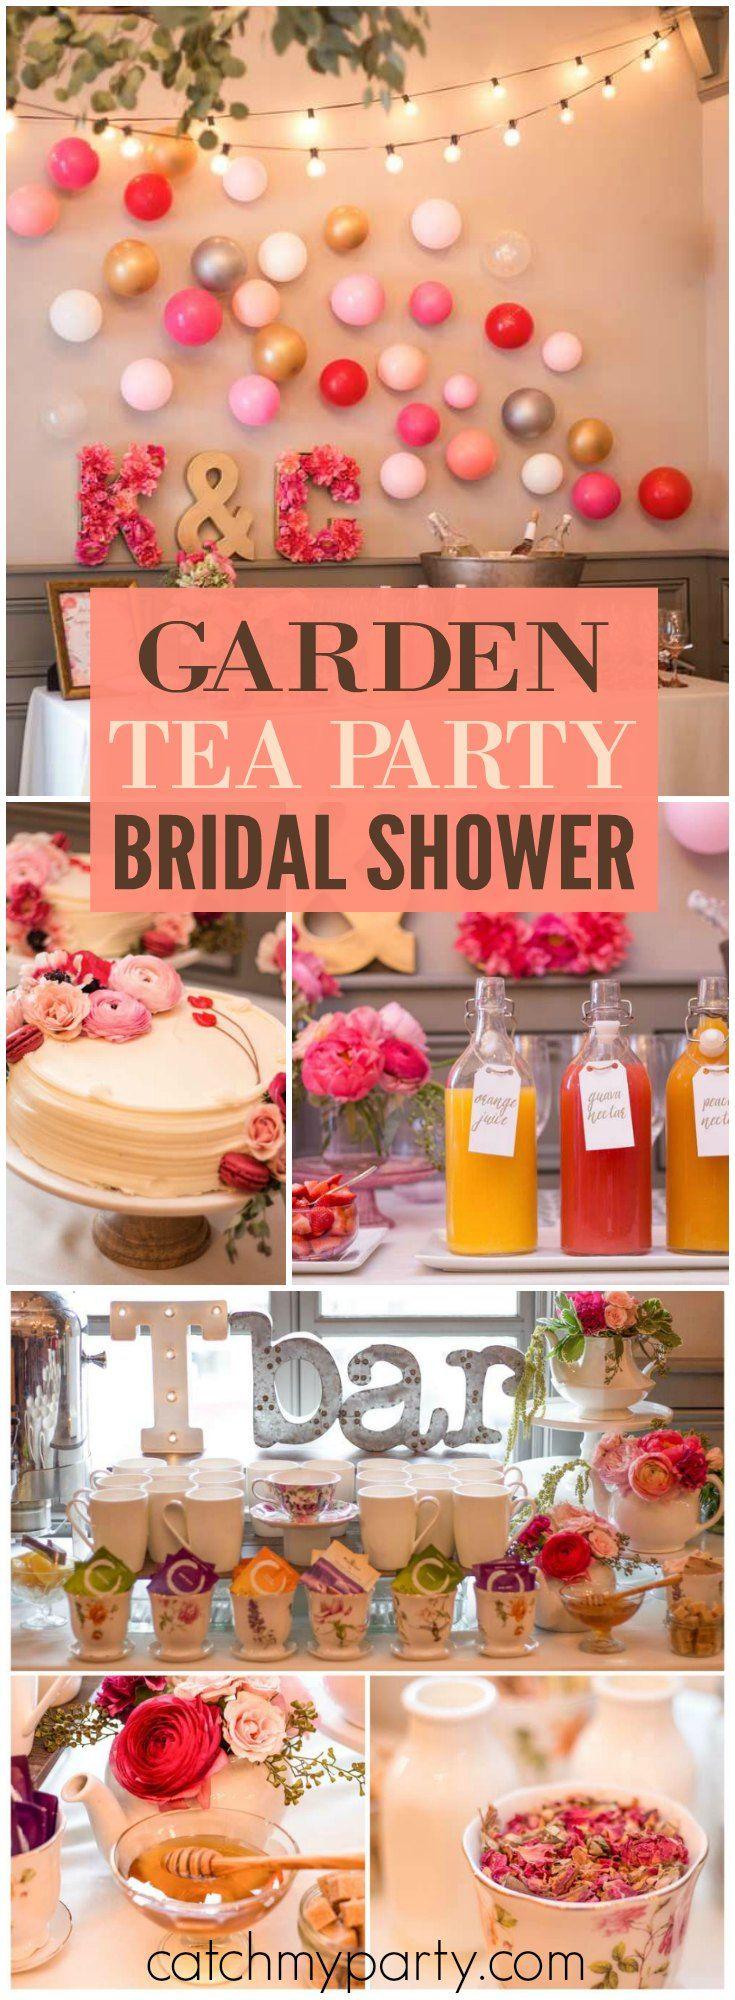 Свадьба - Garden Tea Party / Bridal/Wedding Shower "Kimberly' S Garden Tea Party"